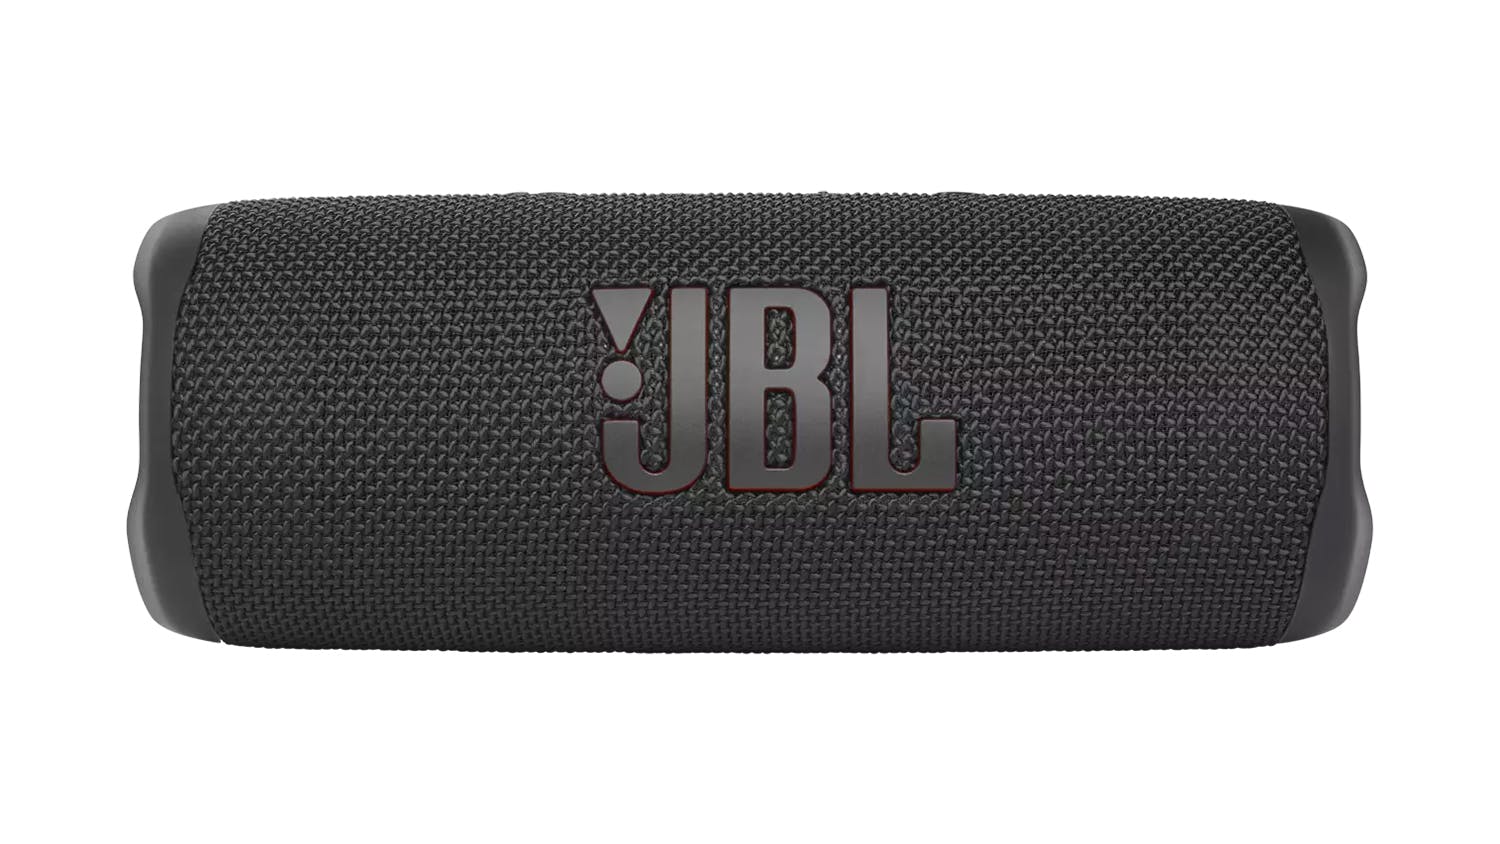 JBL Flip 6 Portable Speaker System - Black (JBLFLIP6BLKAM) for sale online